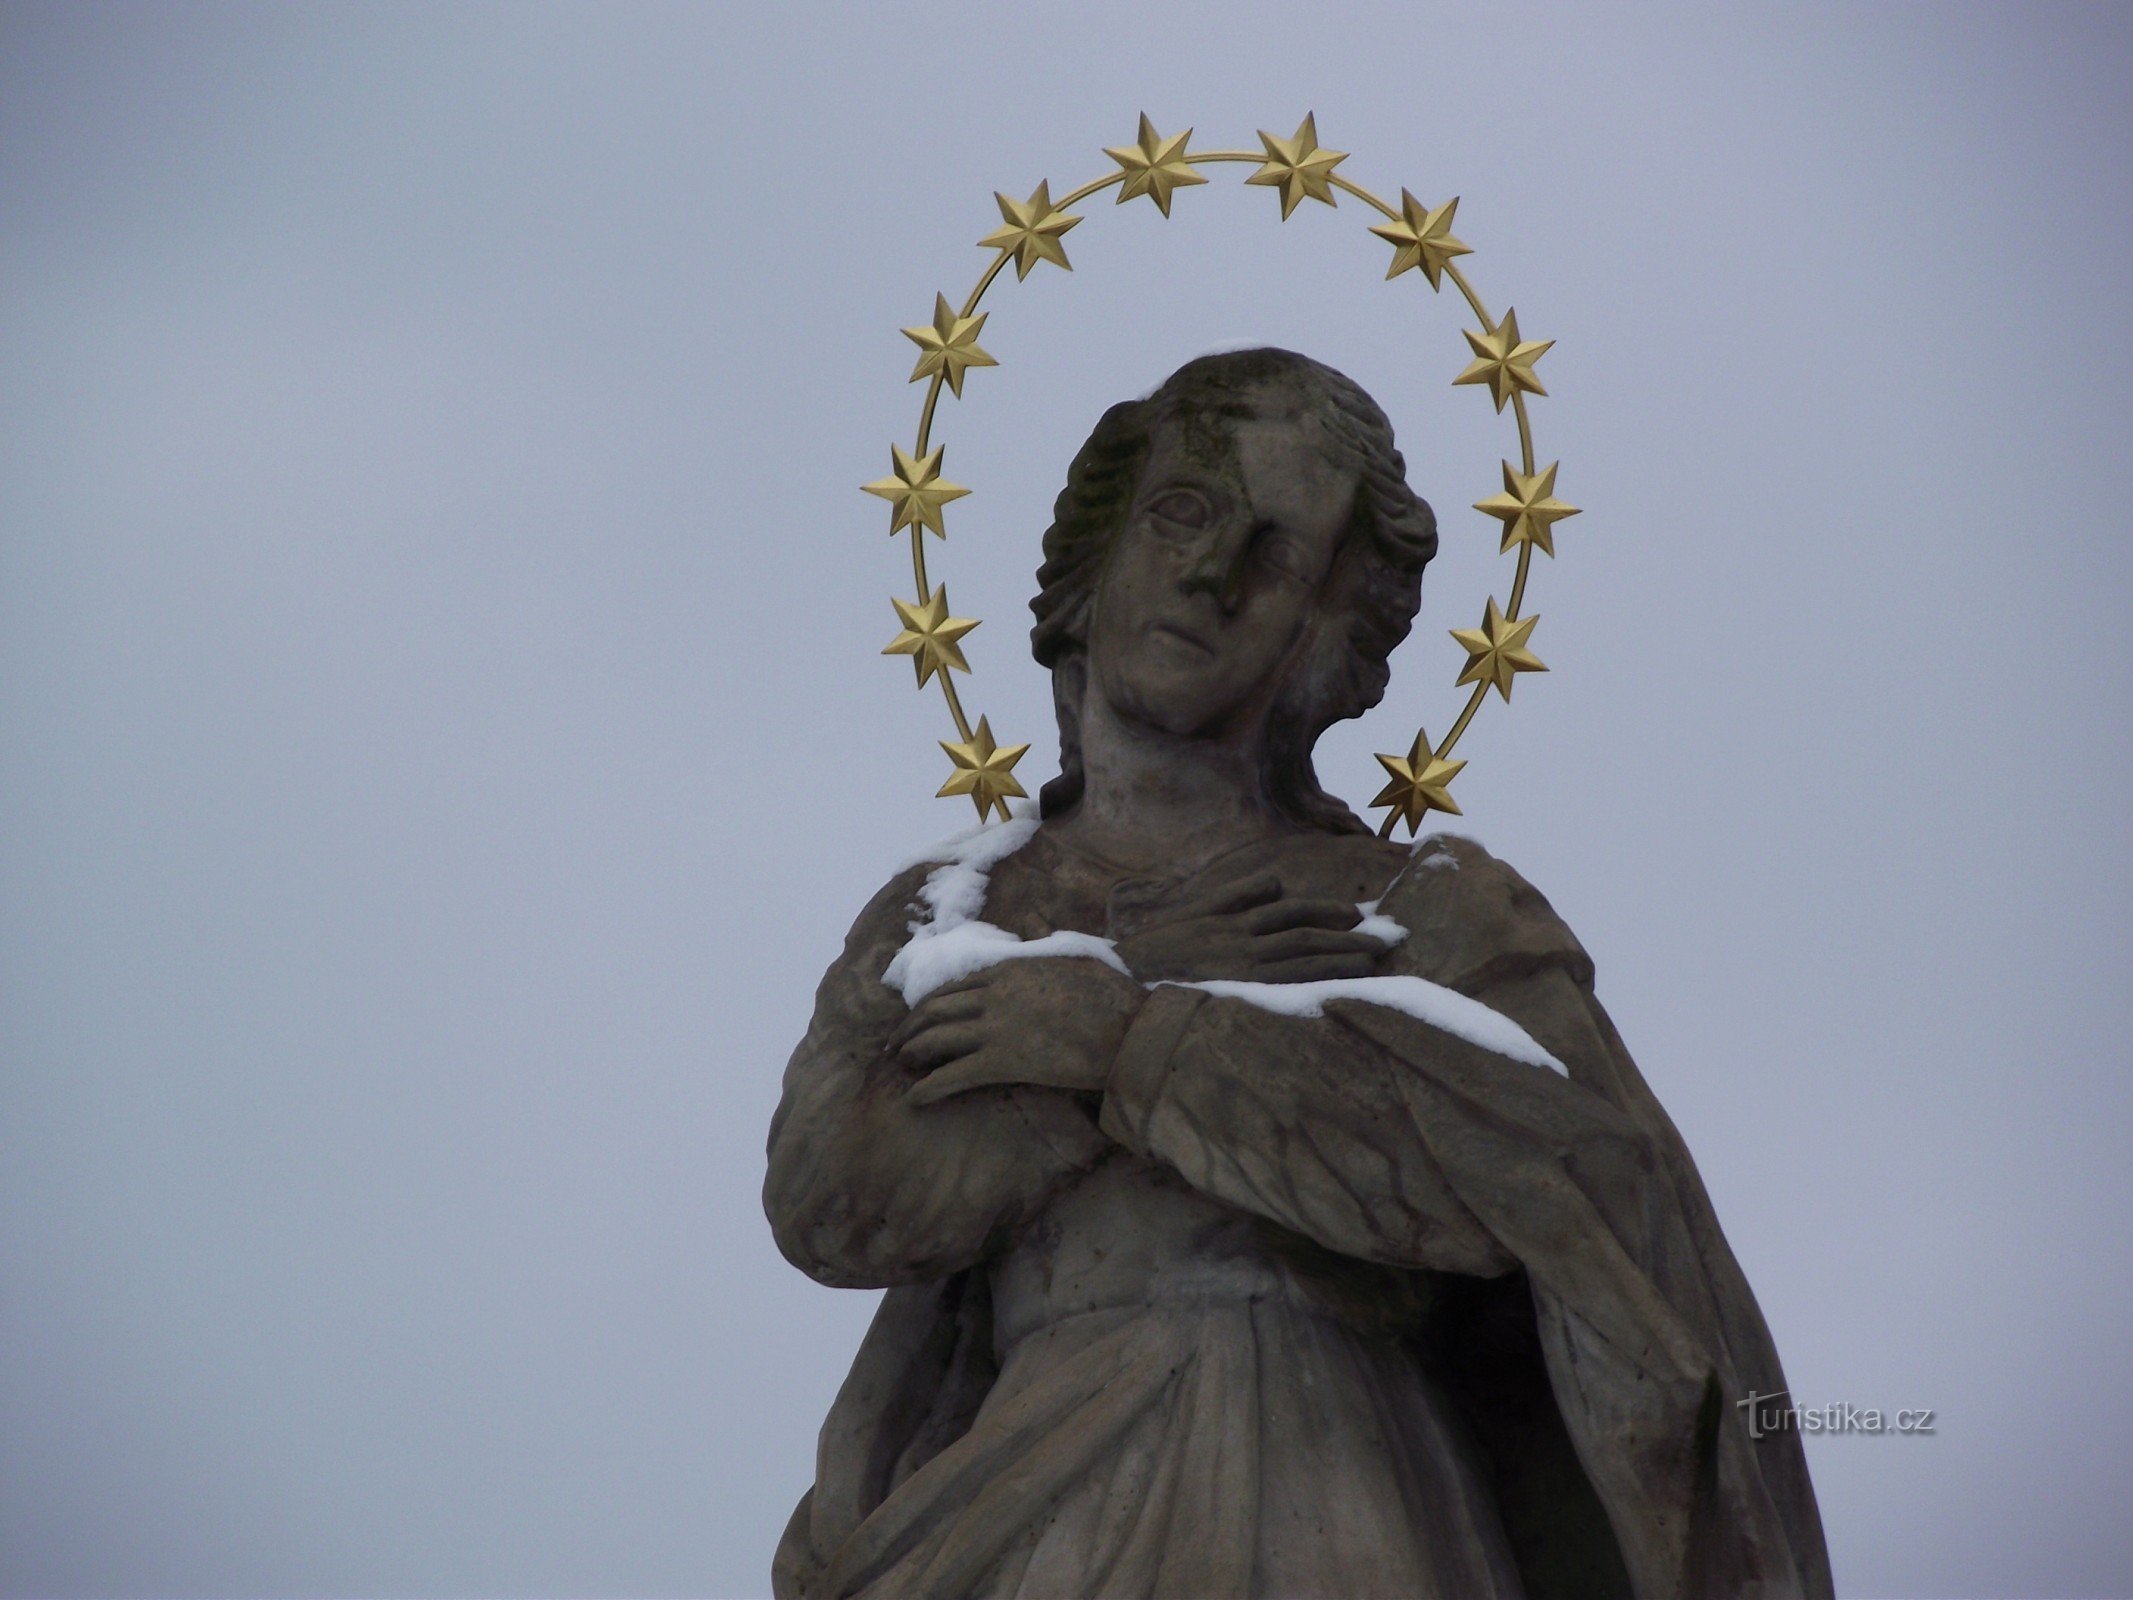 Nový Malín – statue of the Virgin Mary Immaculate